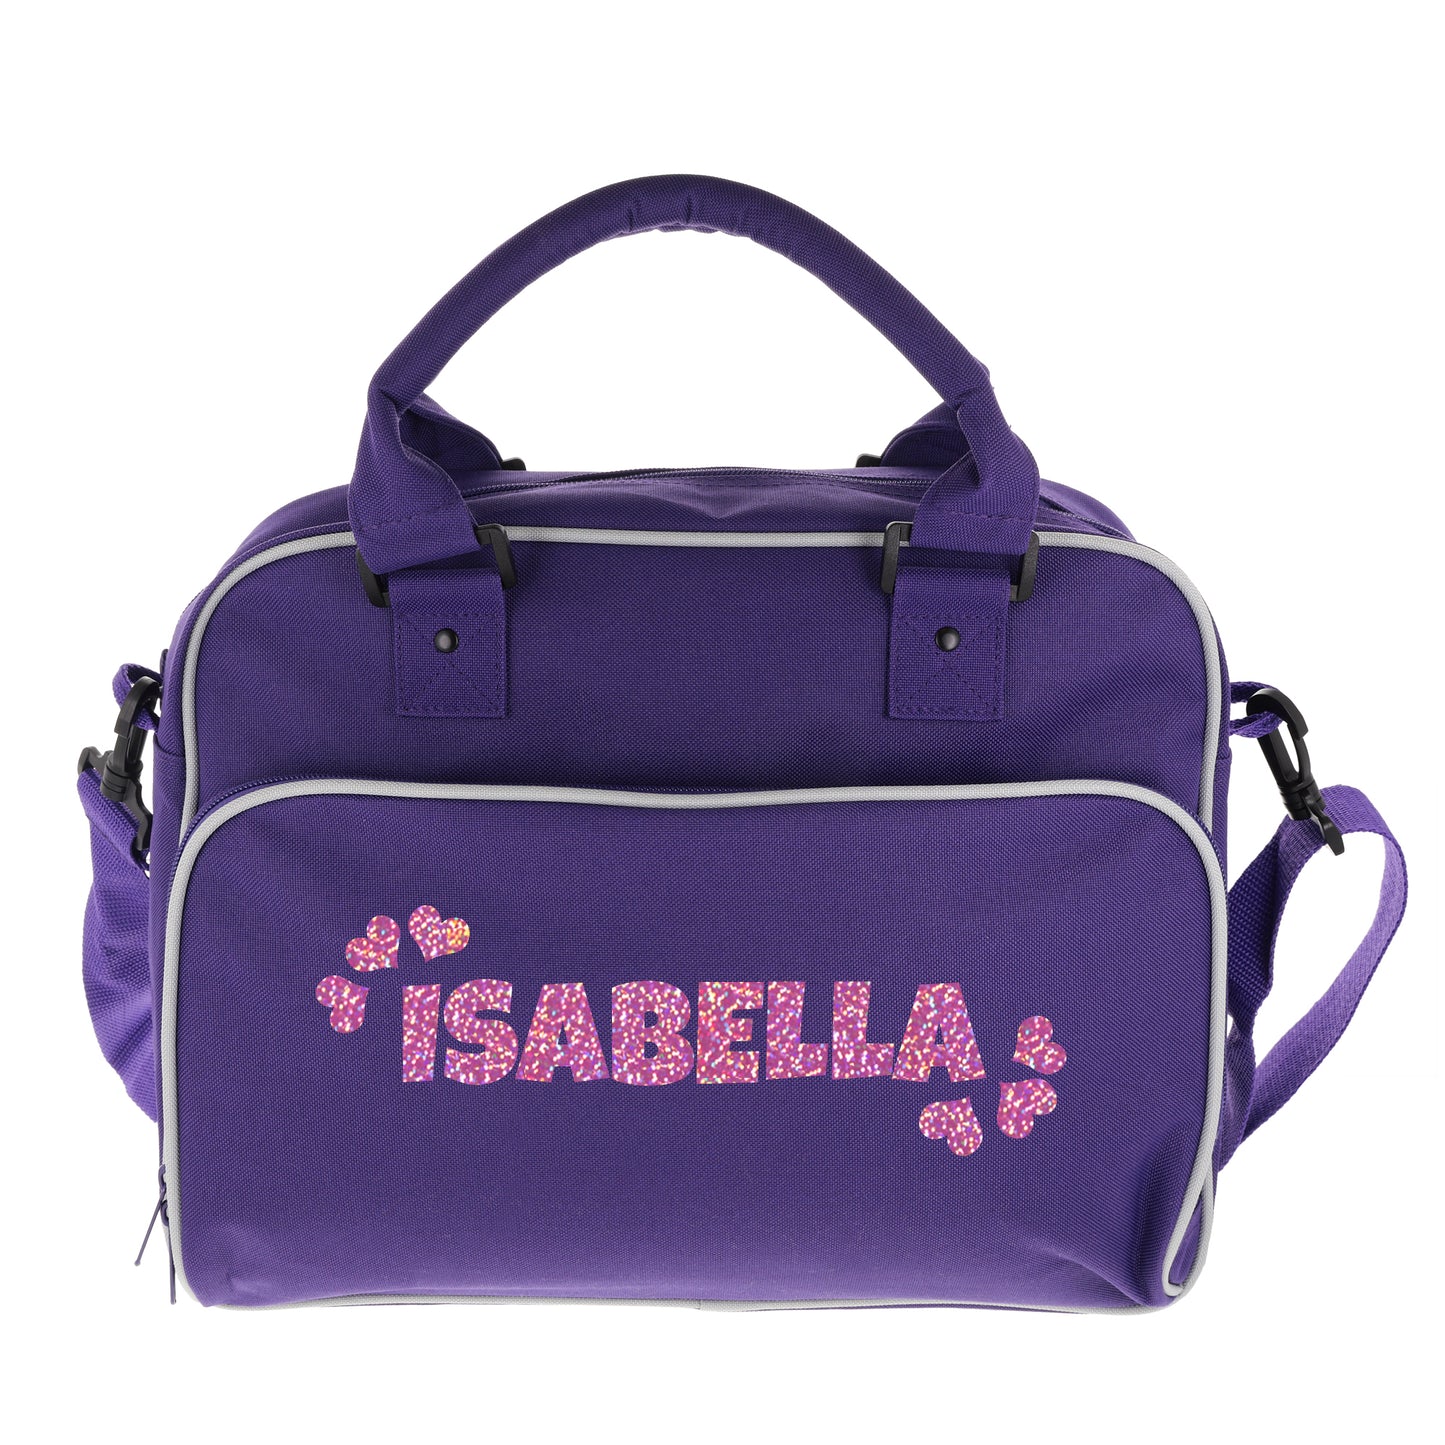 Personalised Girls Sports Bag with Name Dancing Swimming Gymnastic School Gym Bag  - Always Looking Good - Purple Name & Hearts 